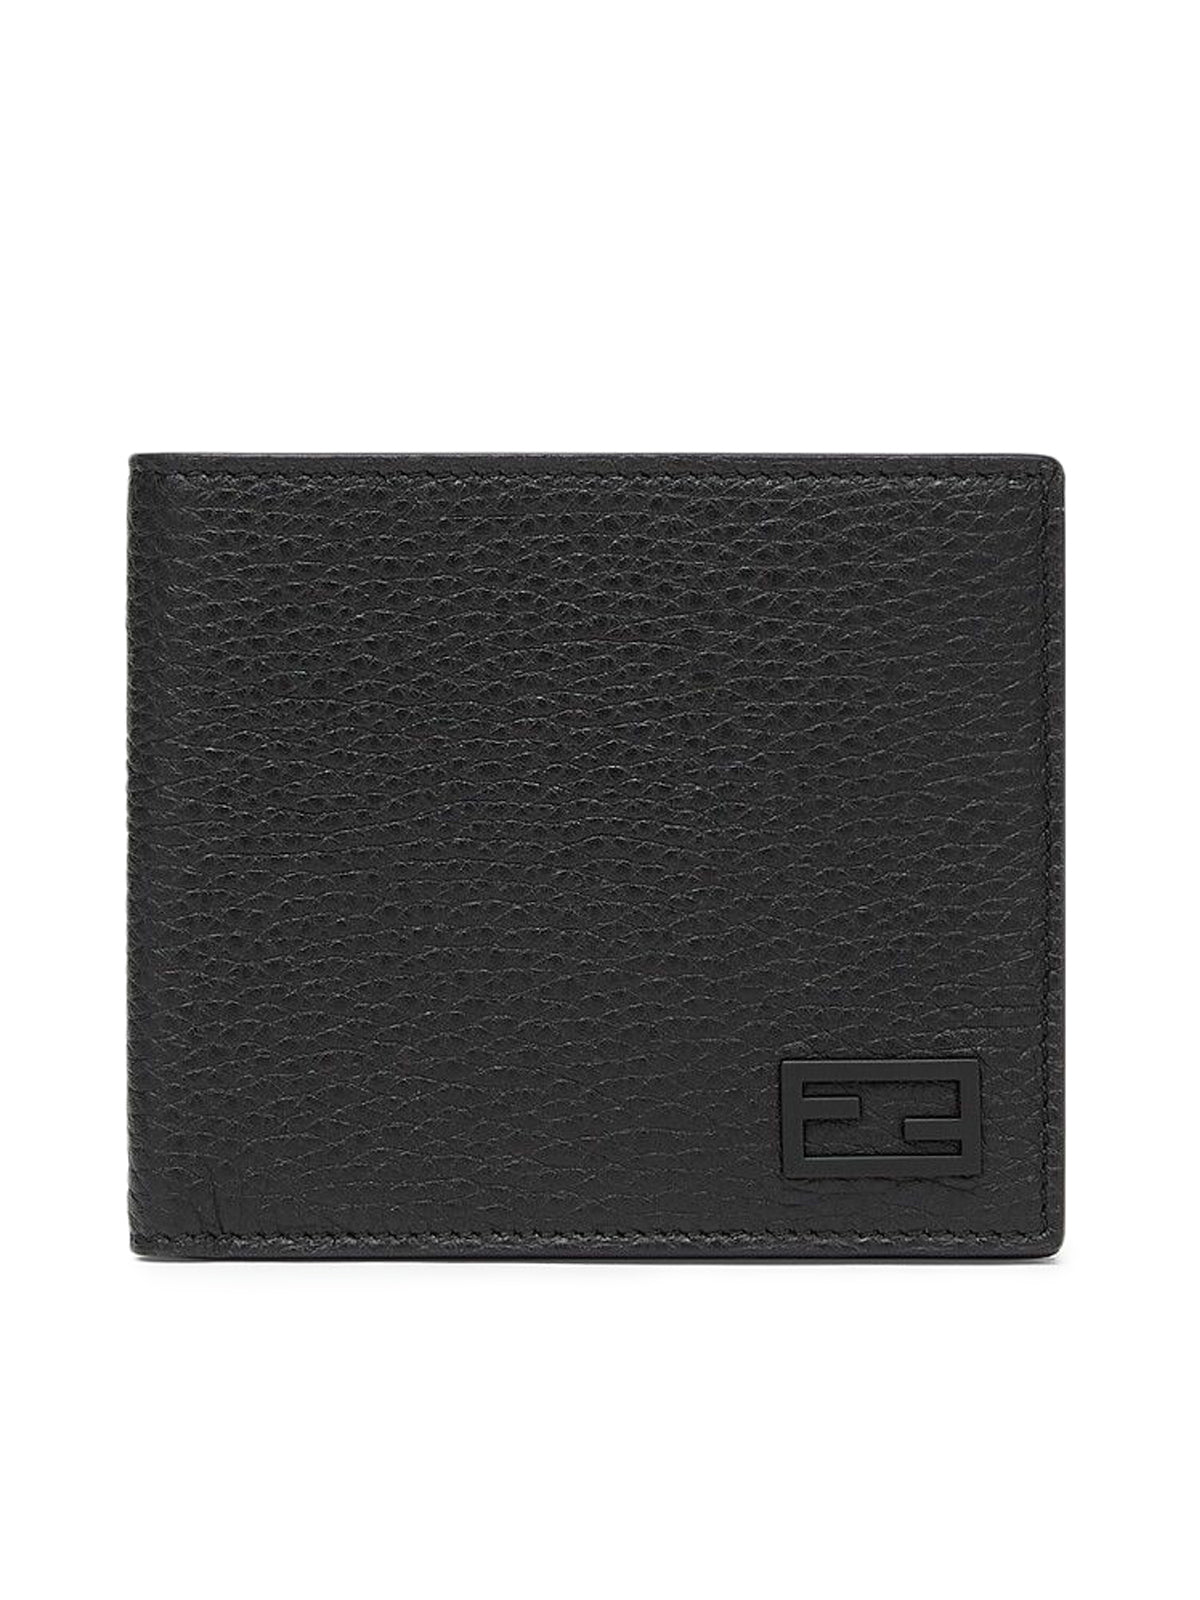 Bi-fold in black leather